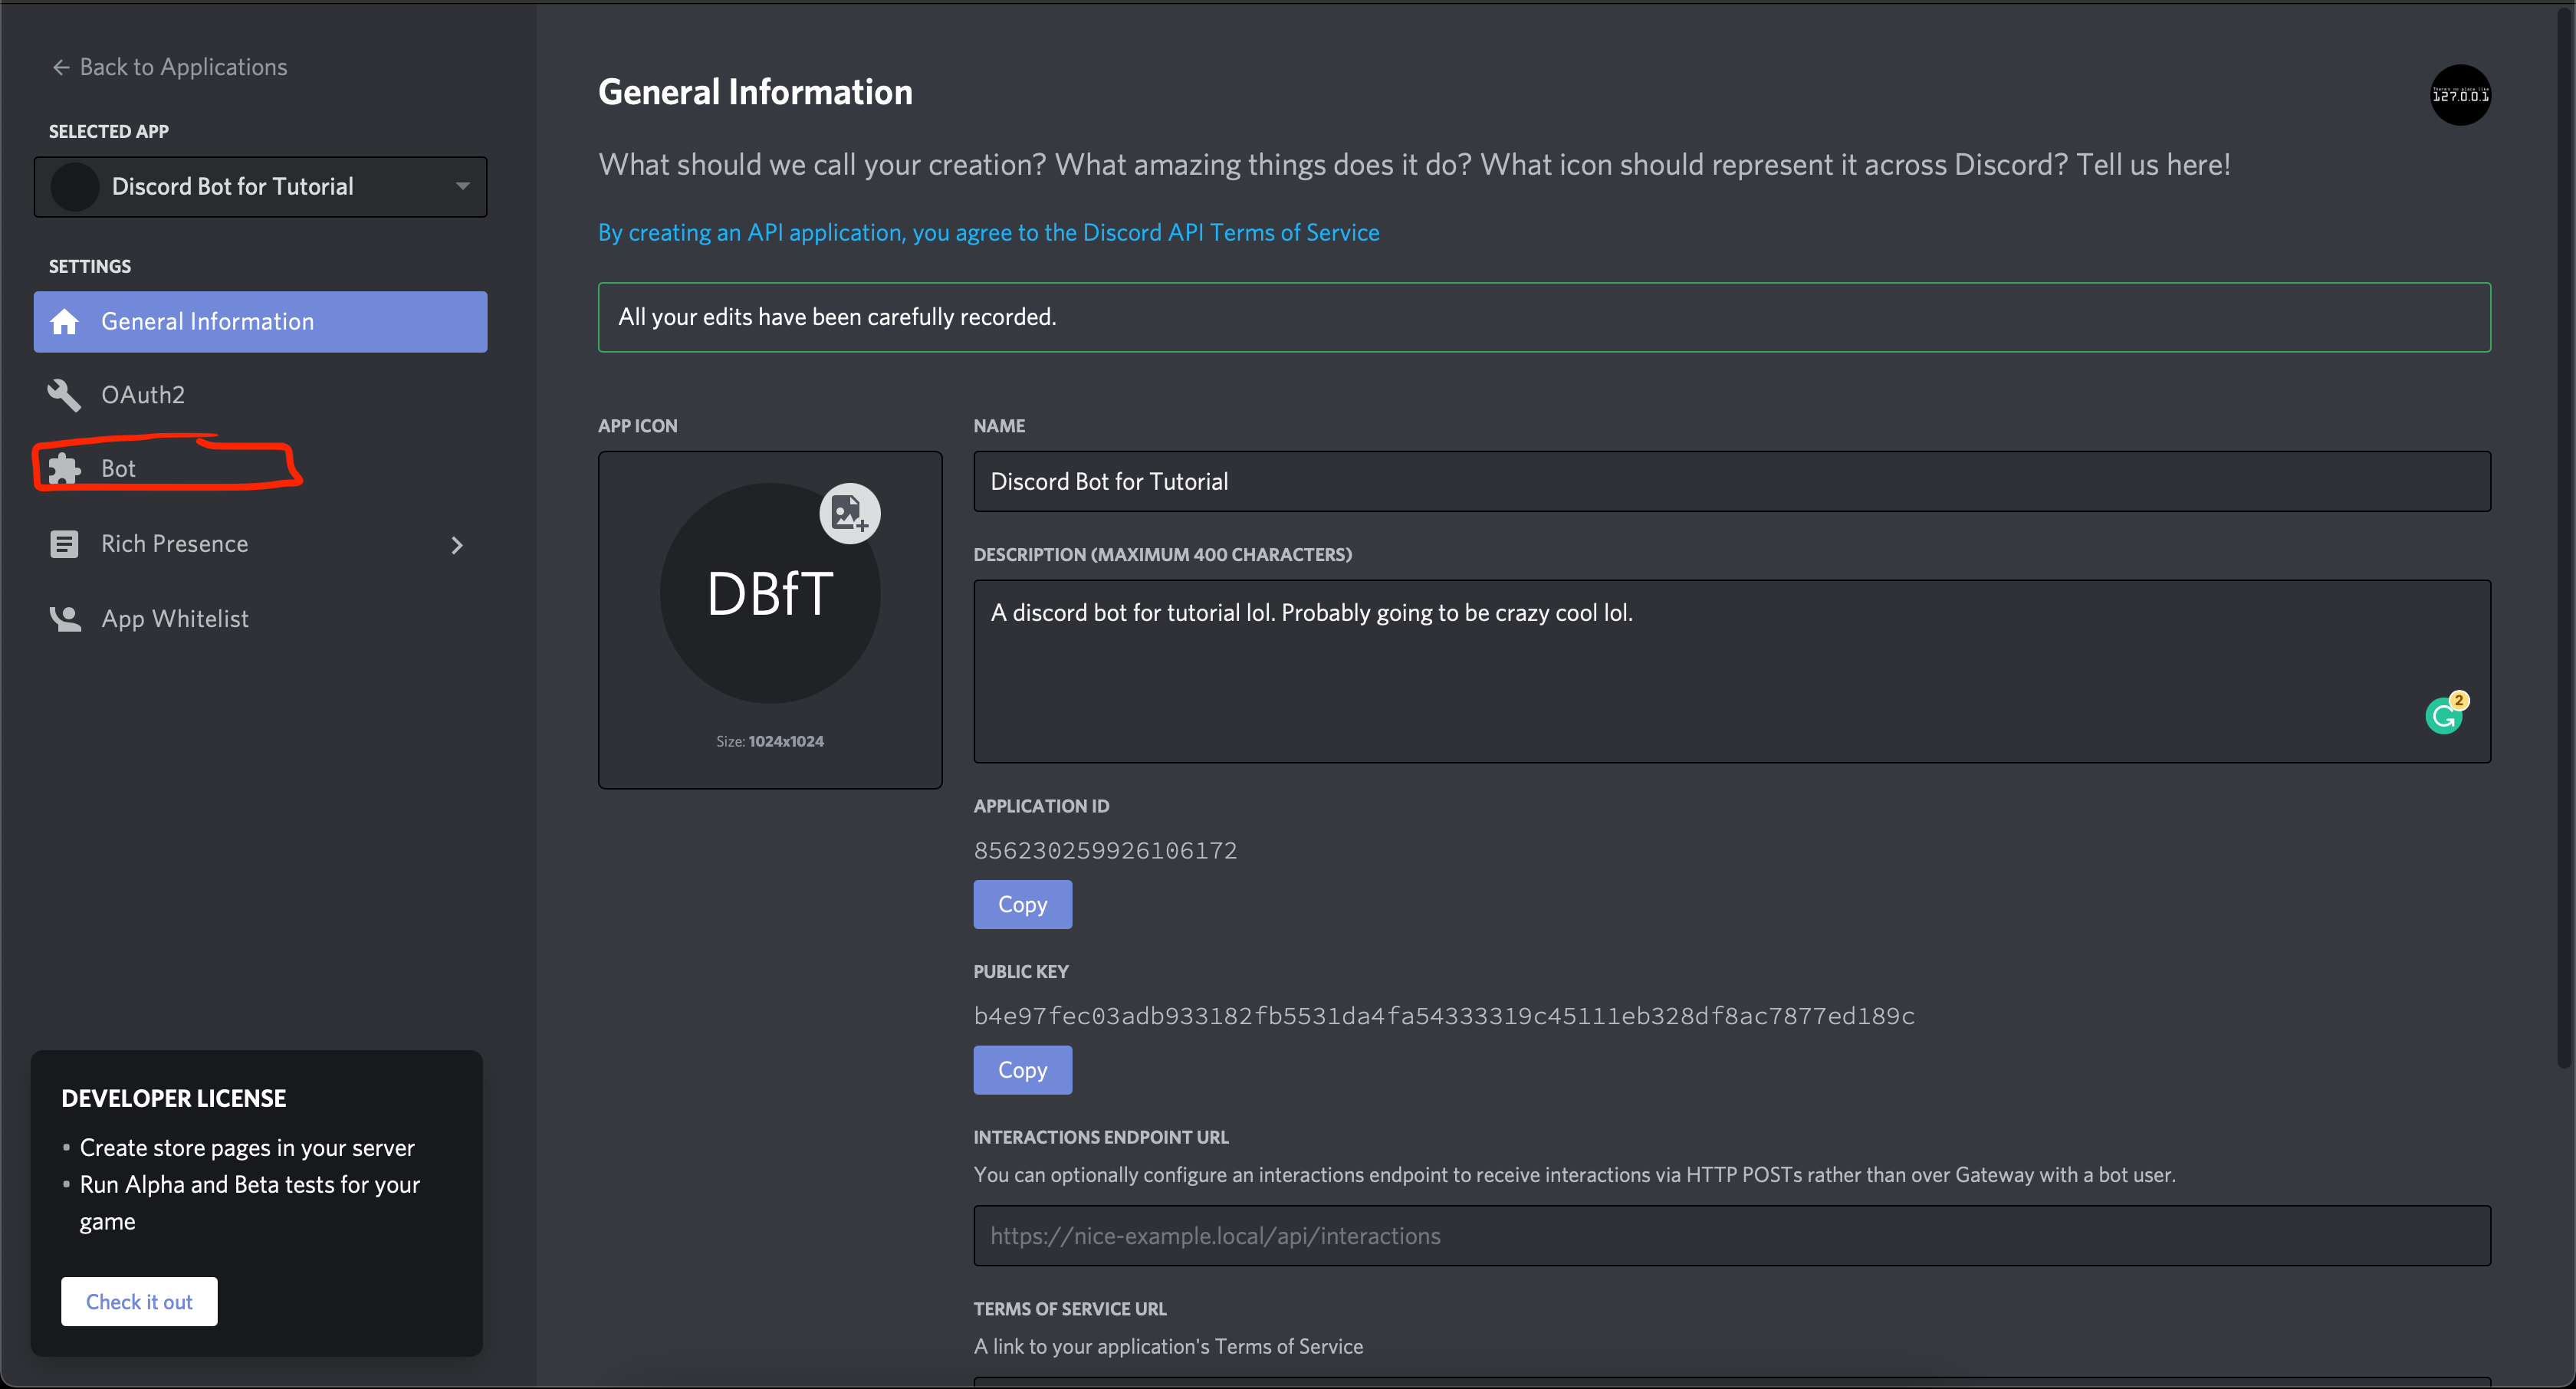 Discord bot in Python! - Replit